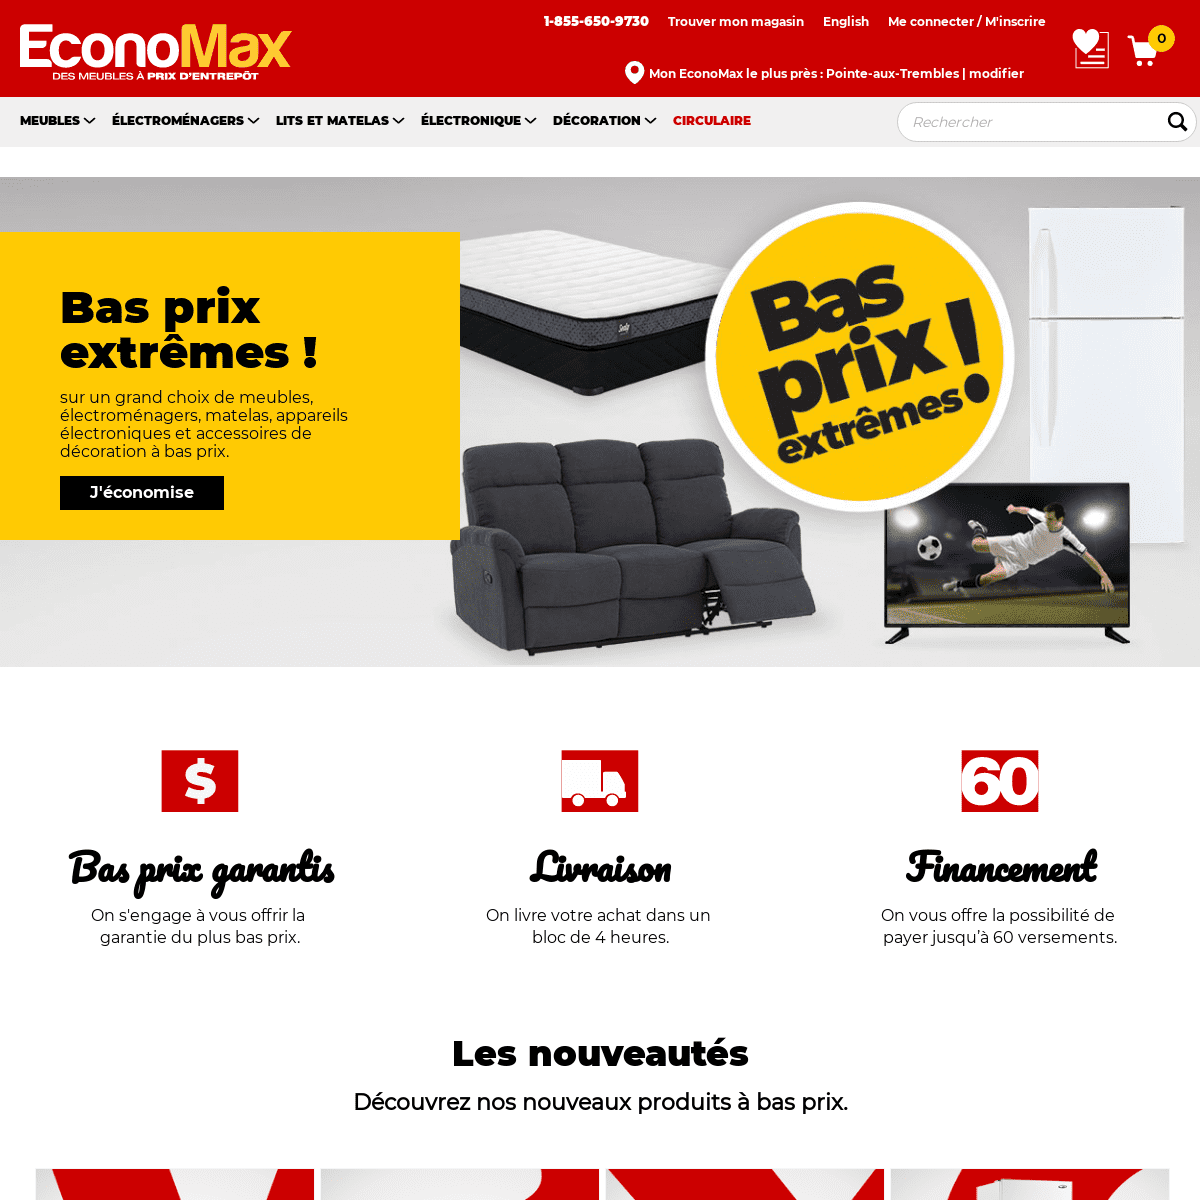 A complete backup of economax.biz